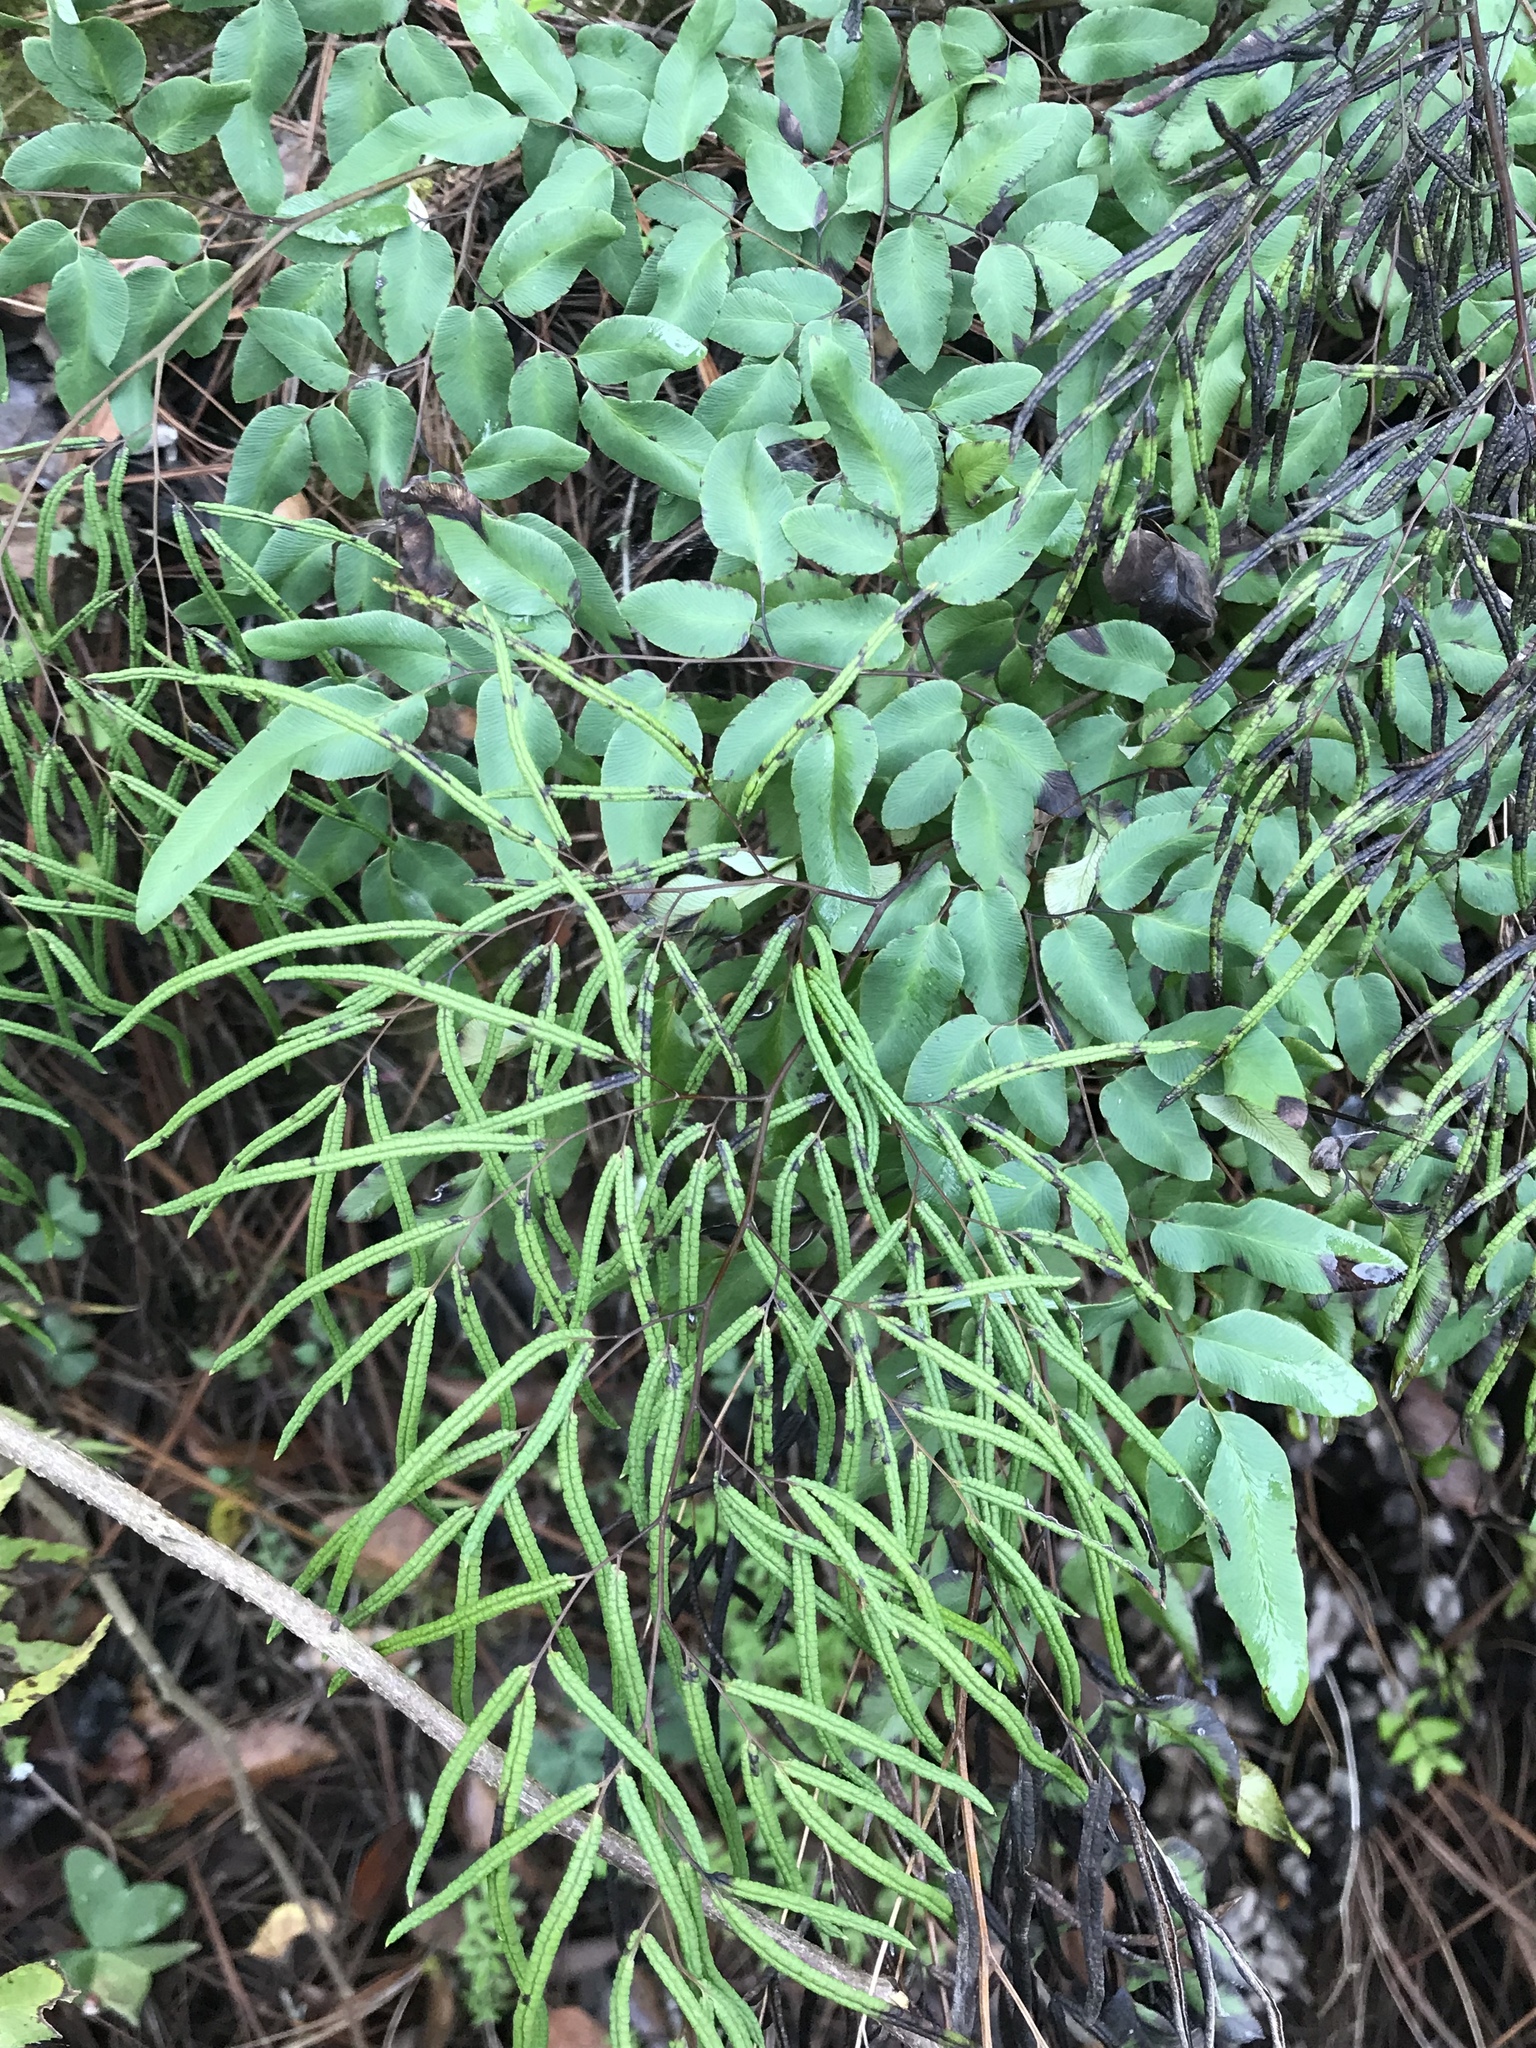 Llavea cordifolia image